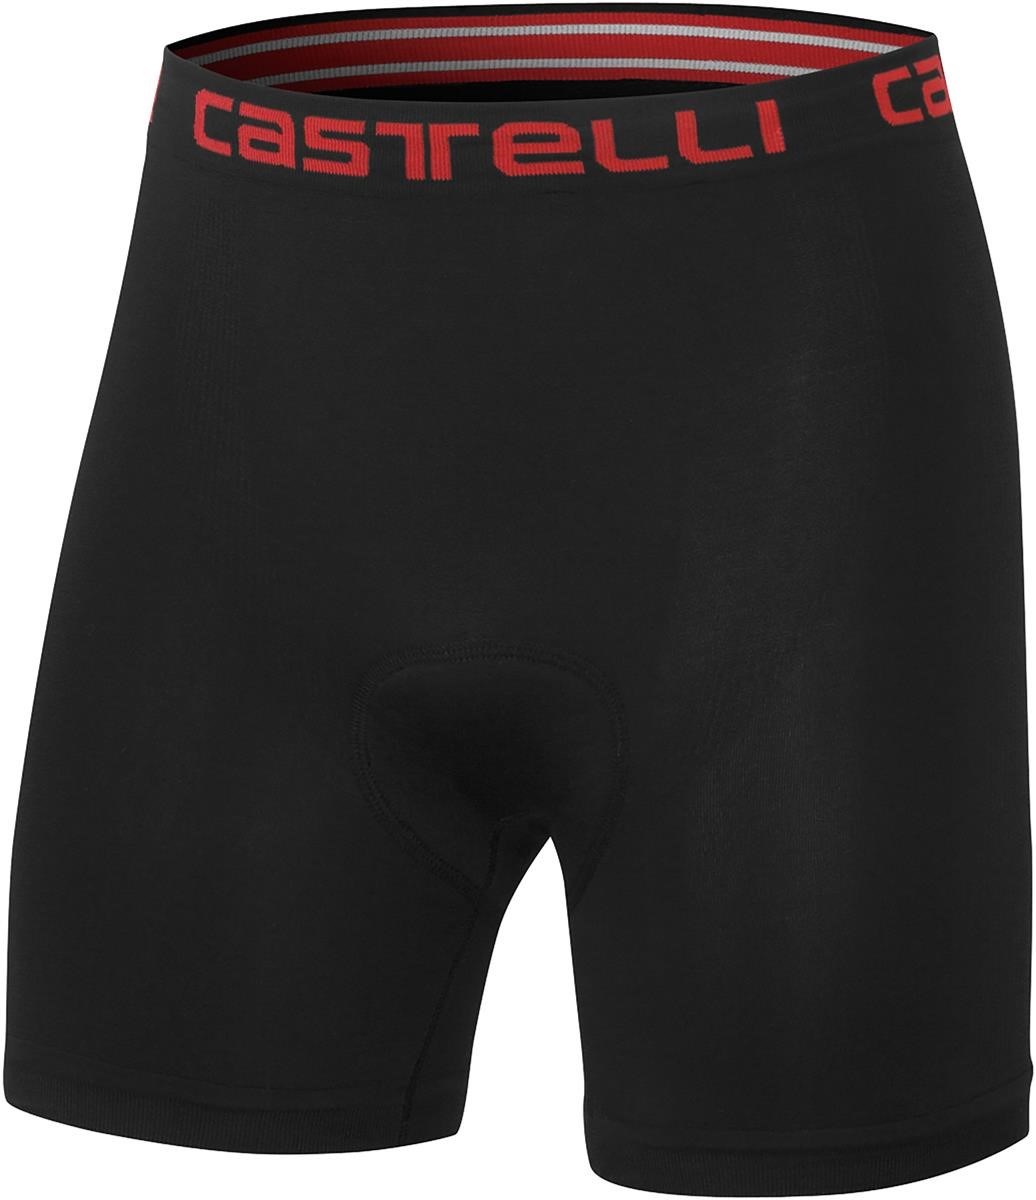 Castelli Seamless Boxer / Under Shorts SS17 product image